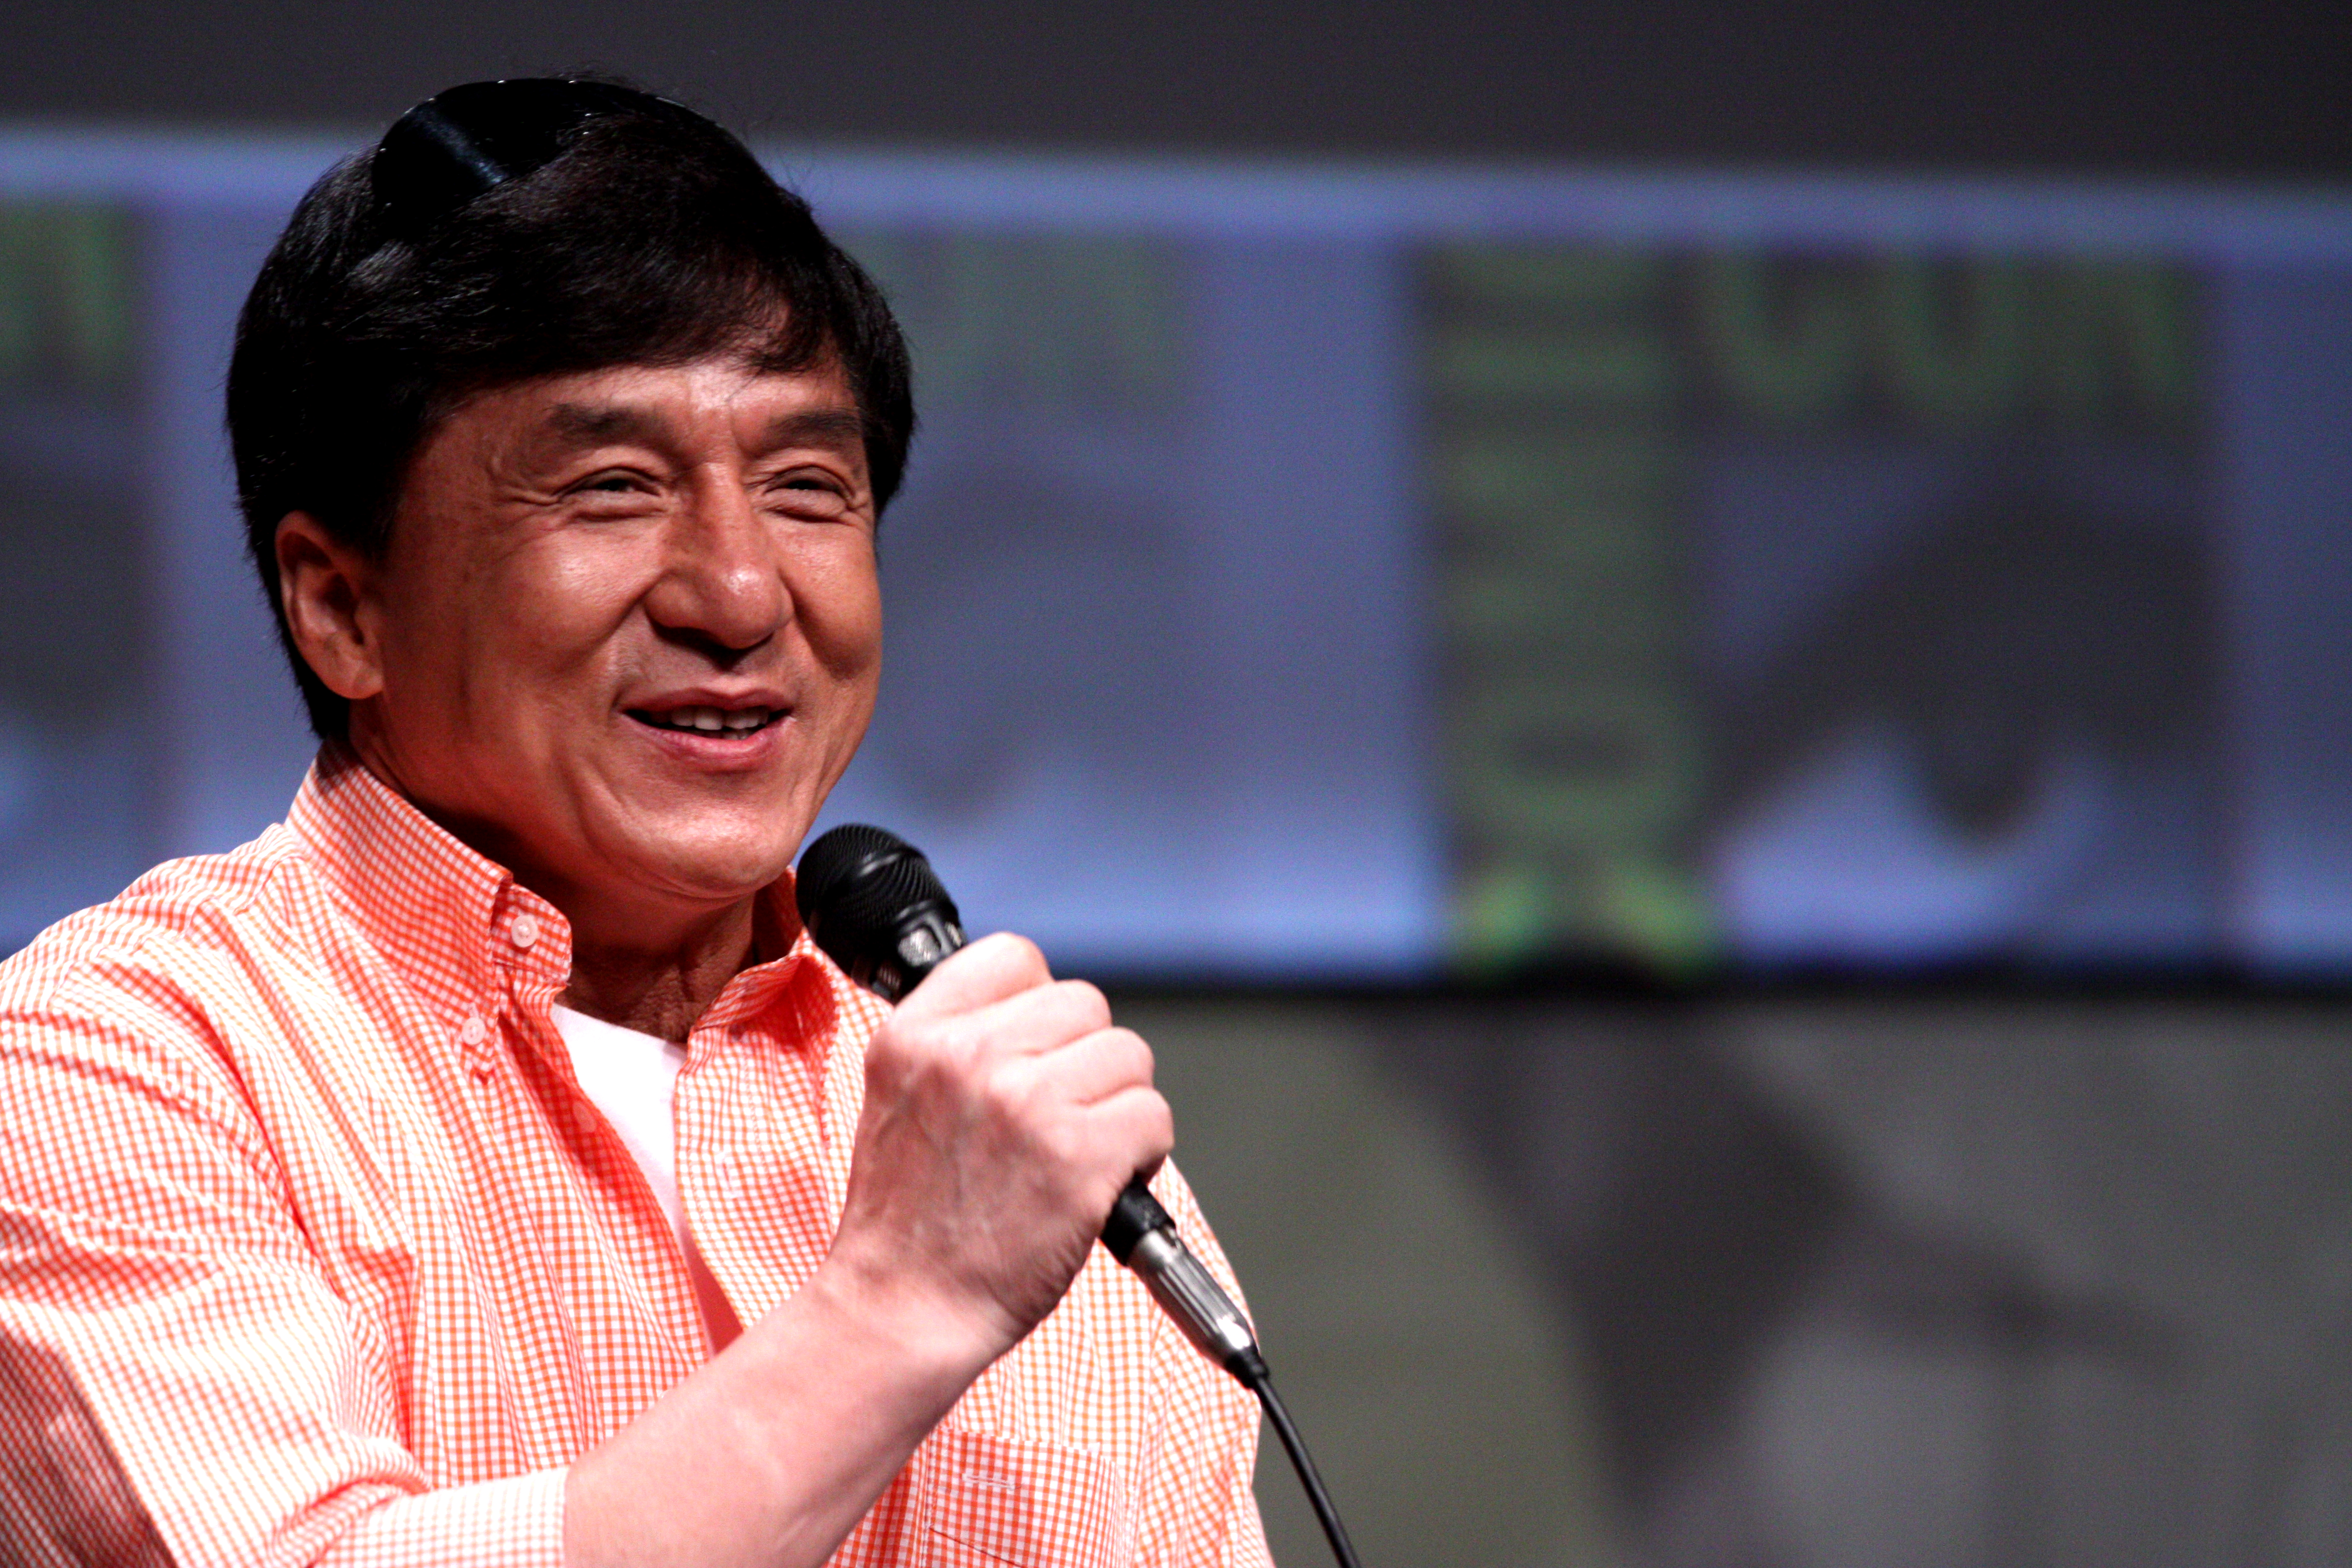 Jackie Chan photo #105233, Jackie Chan image